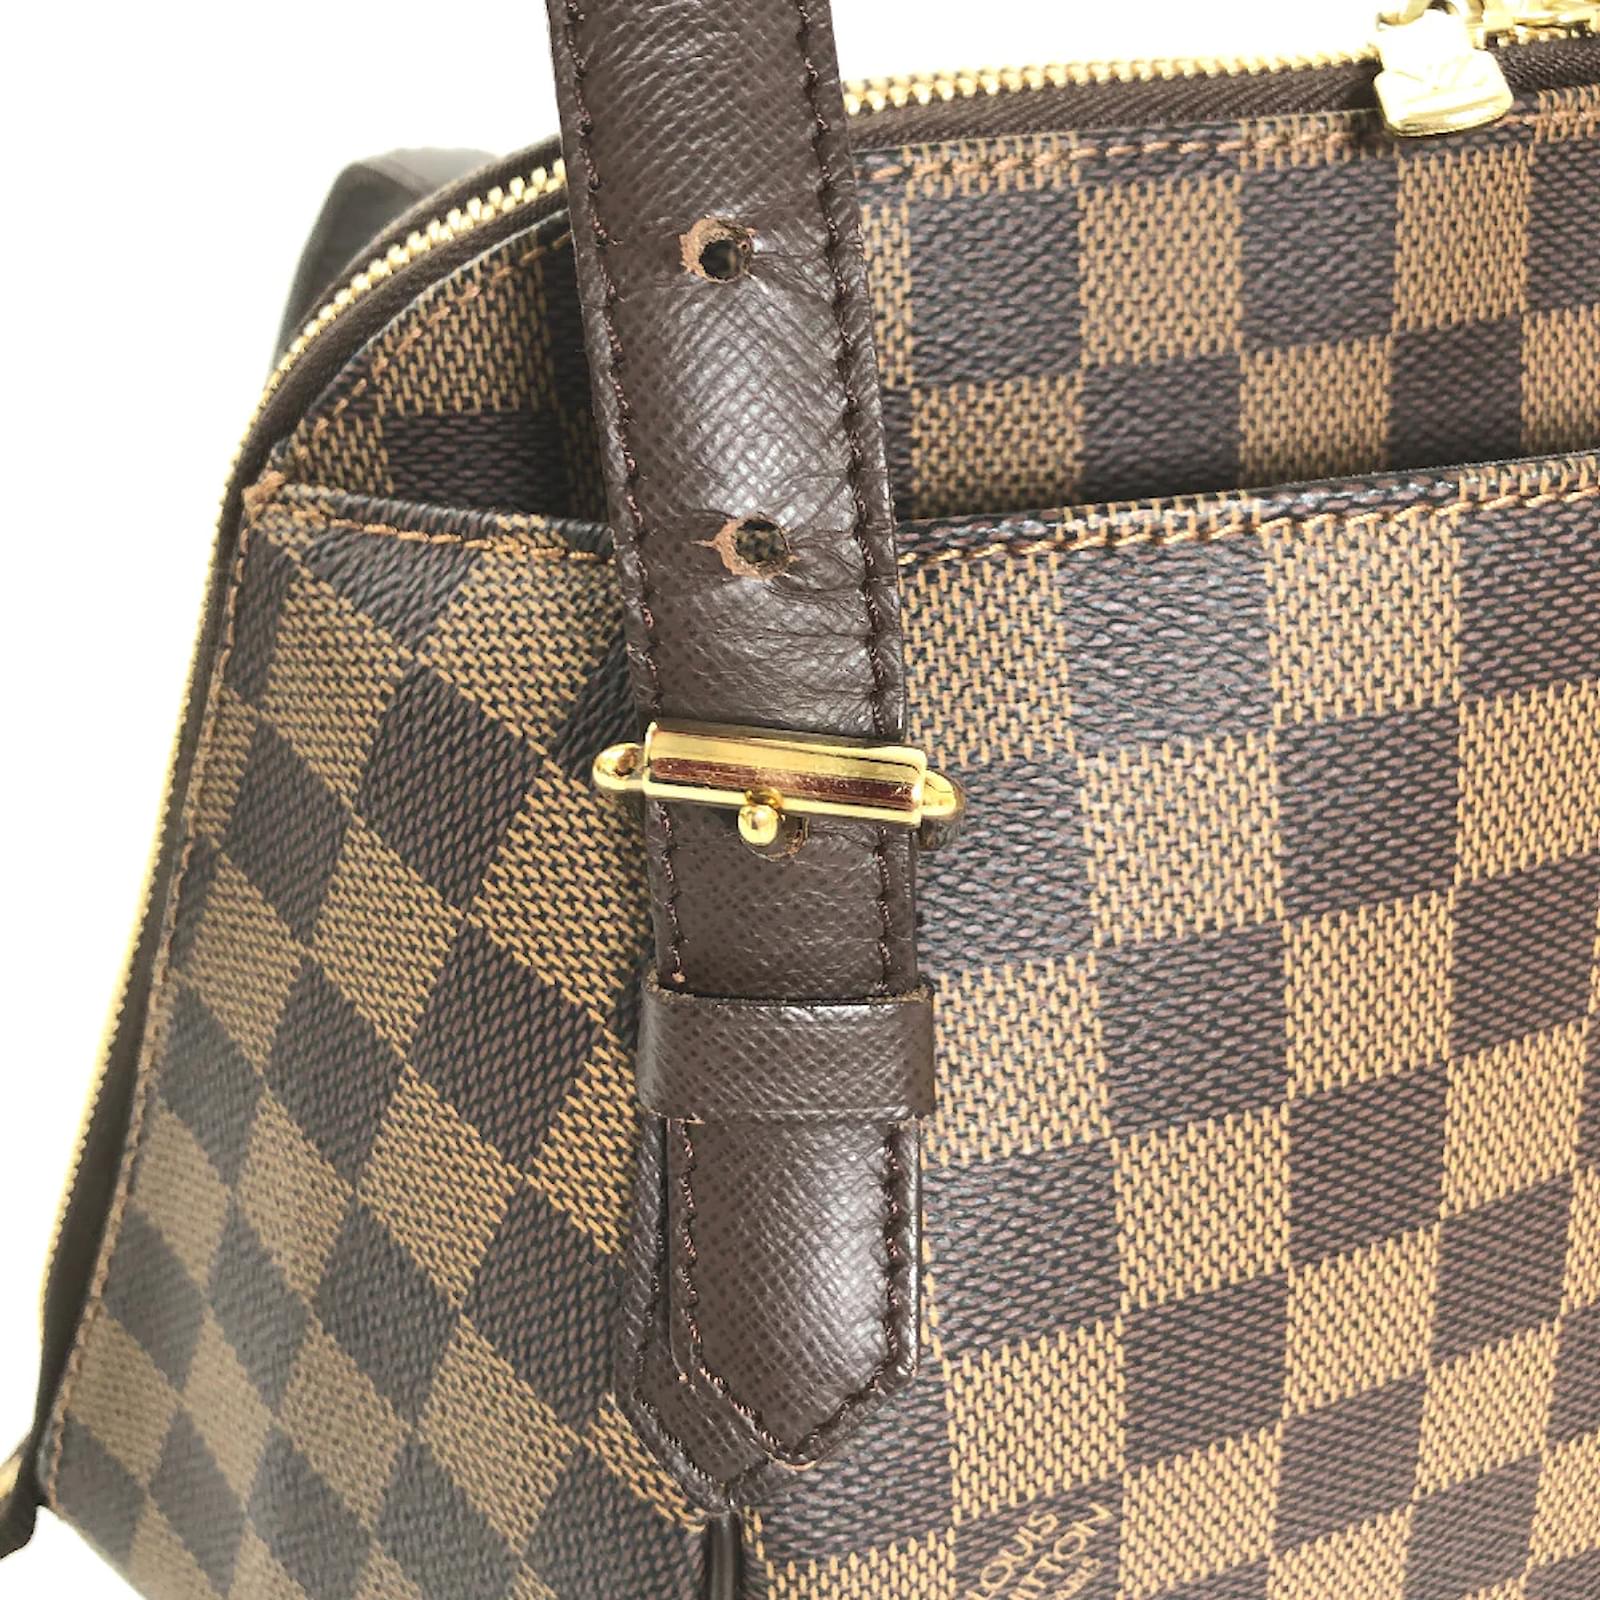 Louis Vuitton Vintage Brown Damier Ebene Belem PM Handbag